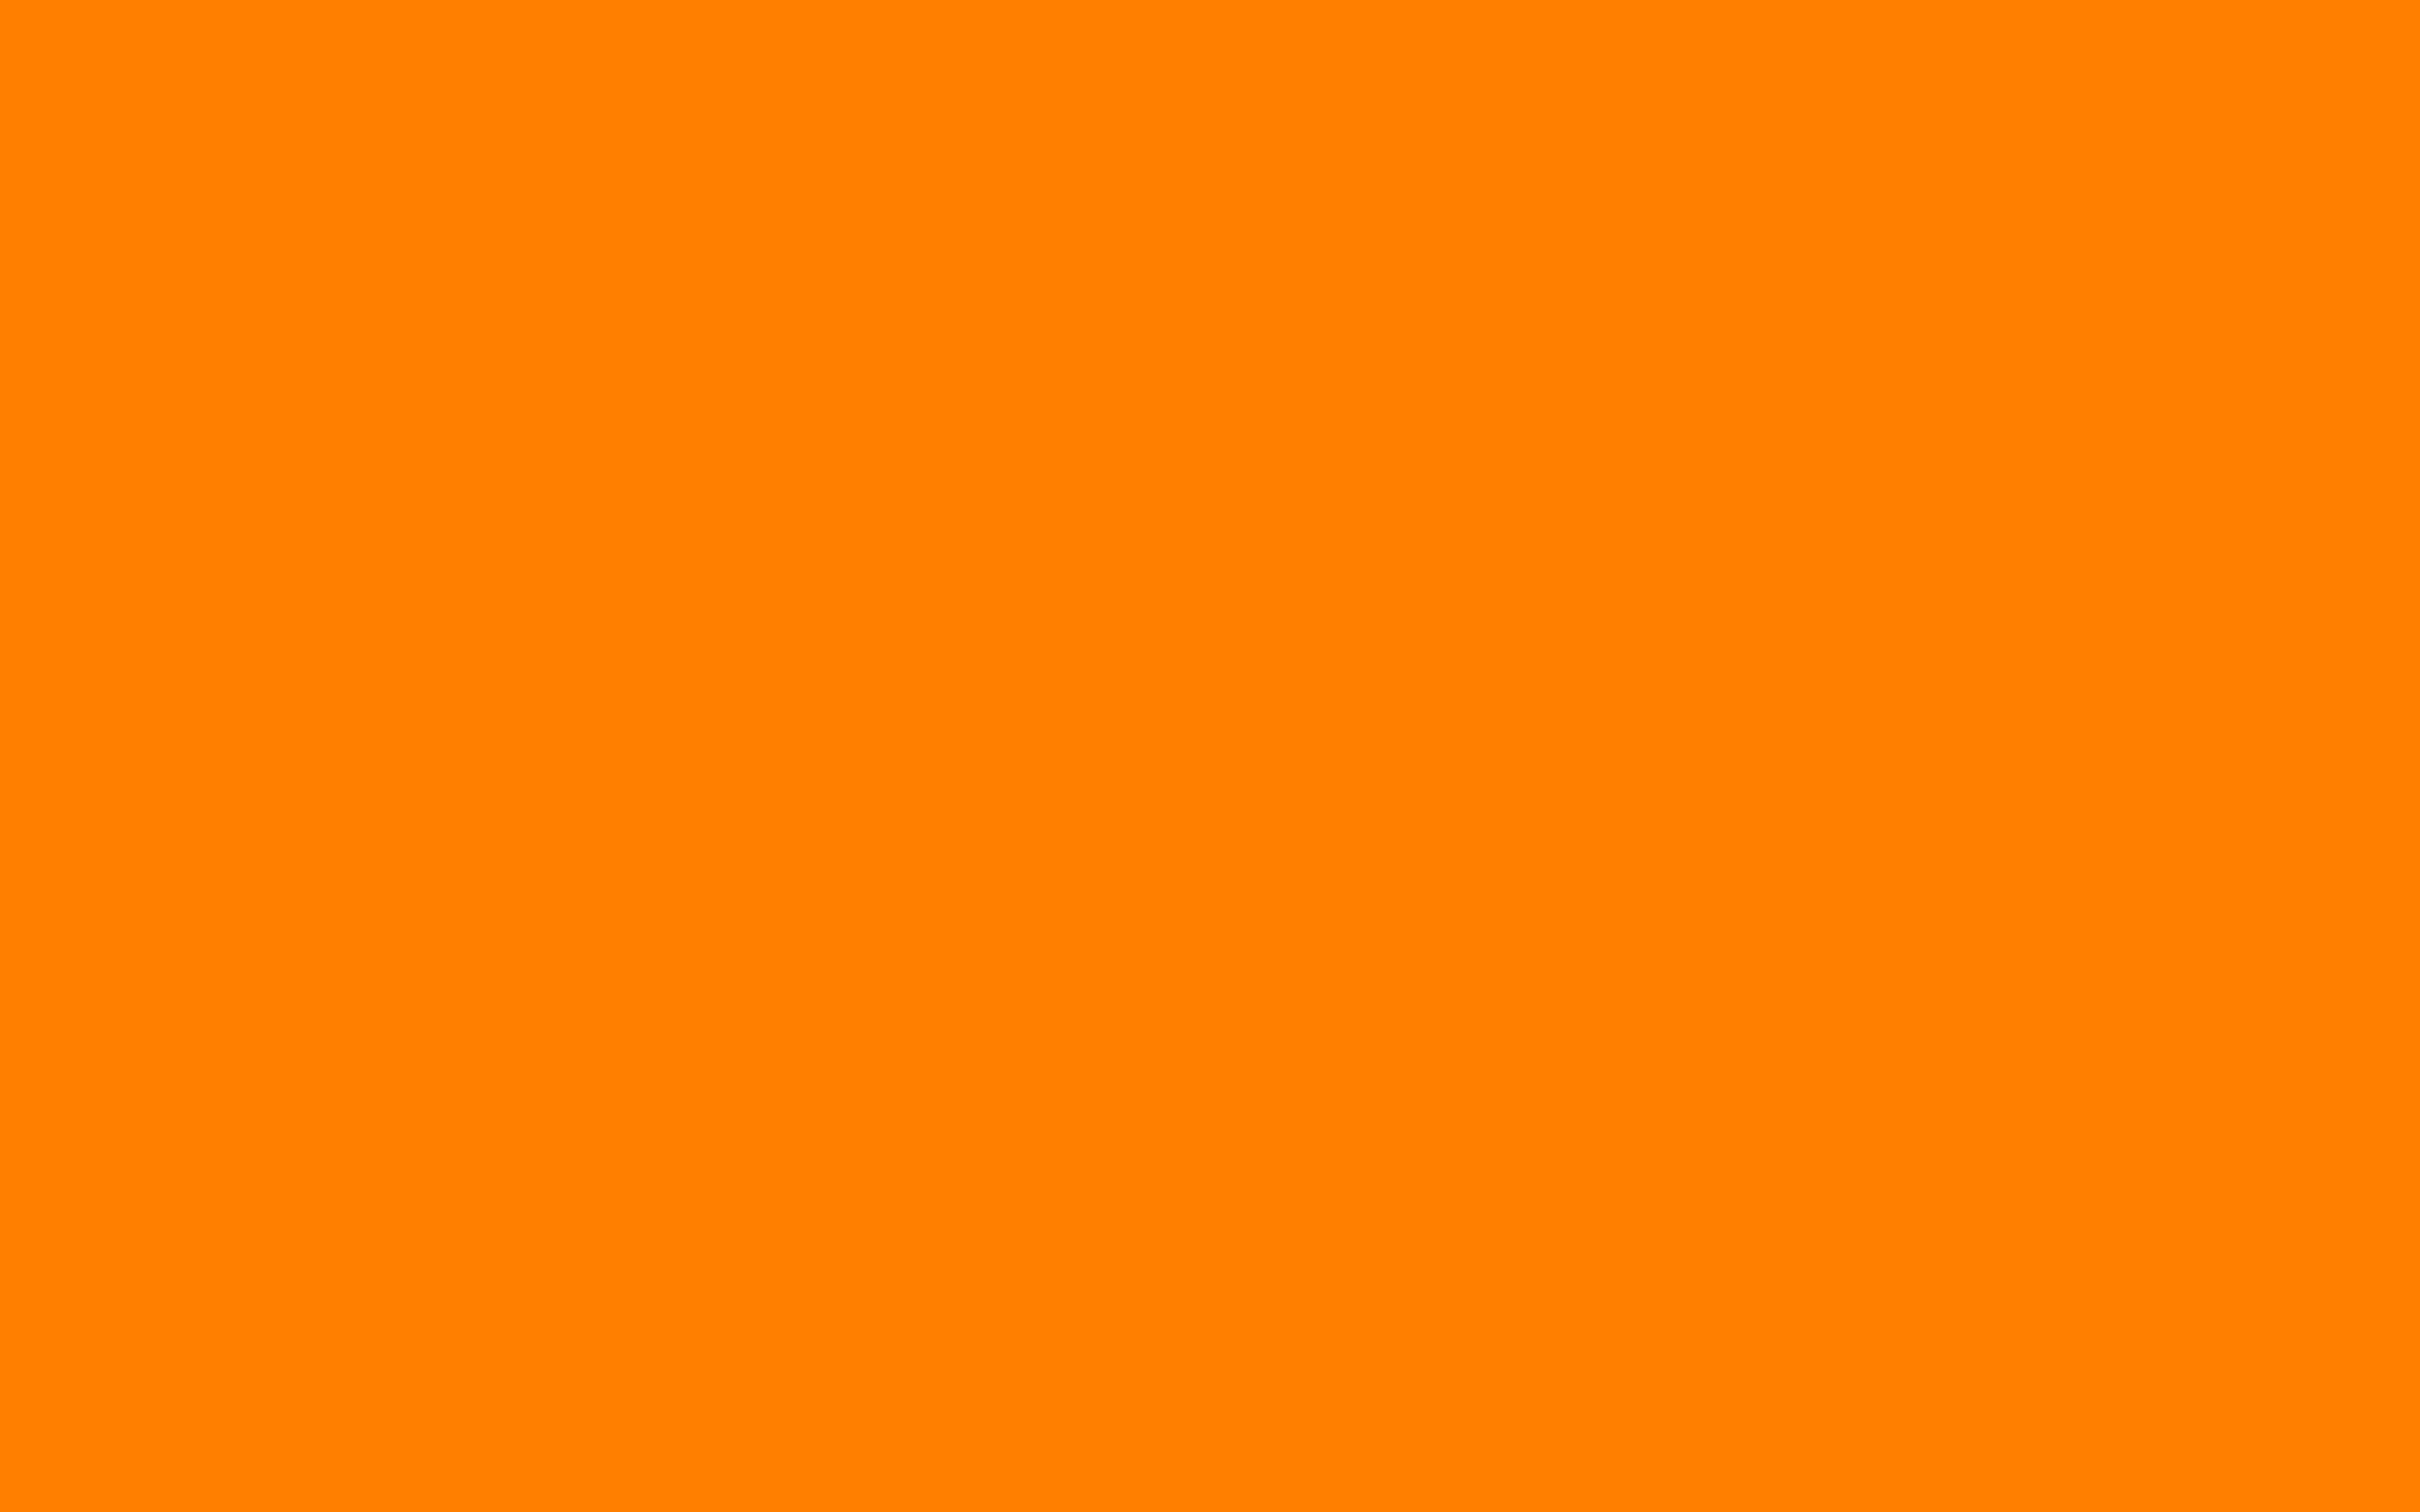 22+] Orange Colour Background Images - WallpaperSafari